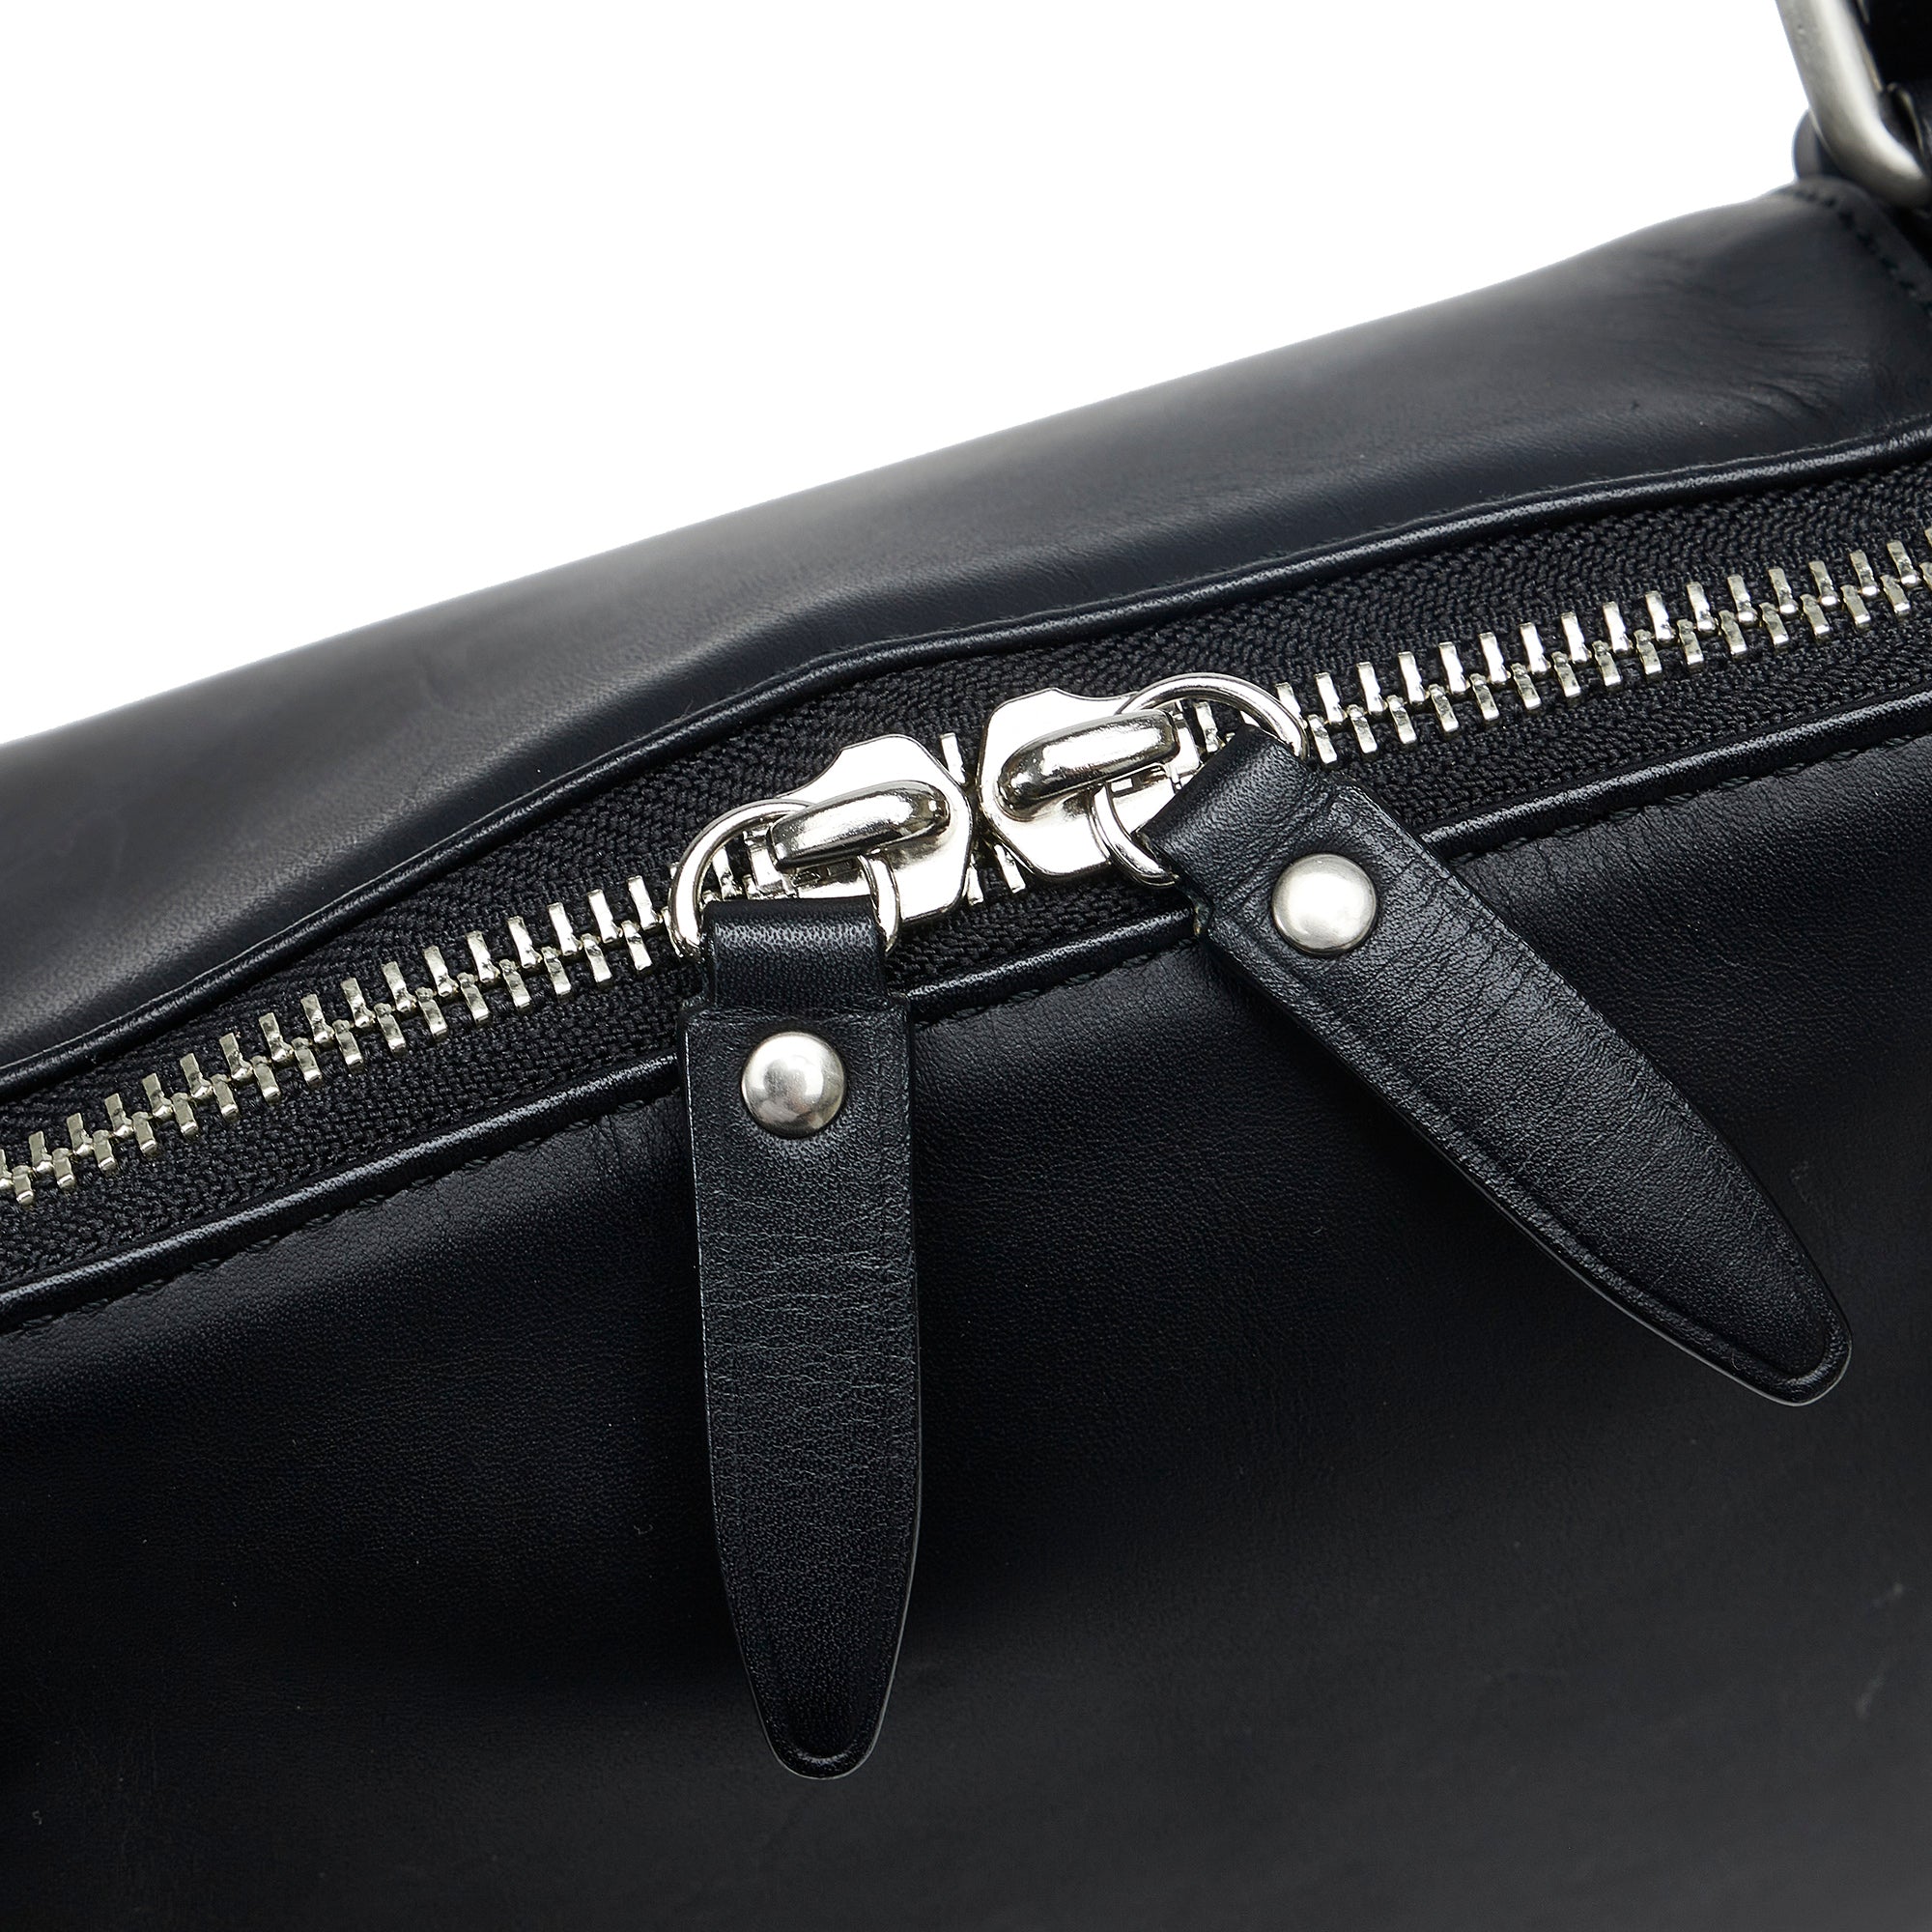 Black Burberry Leather Handbag, RvceShops Revival